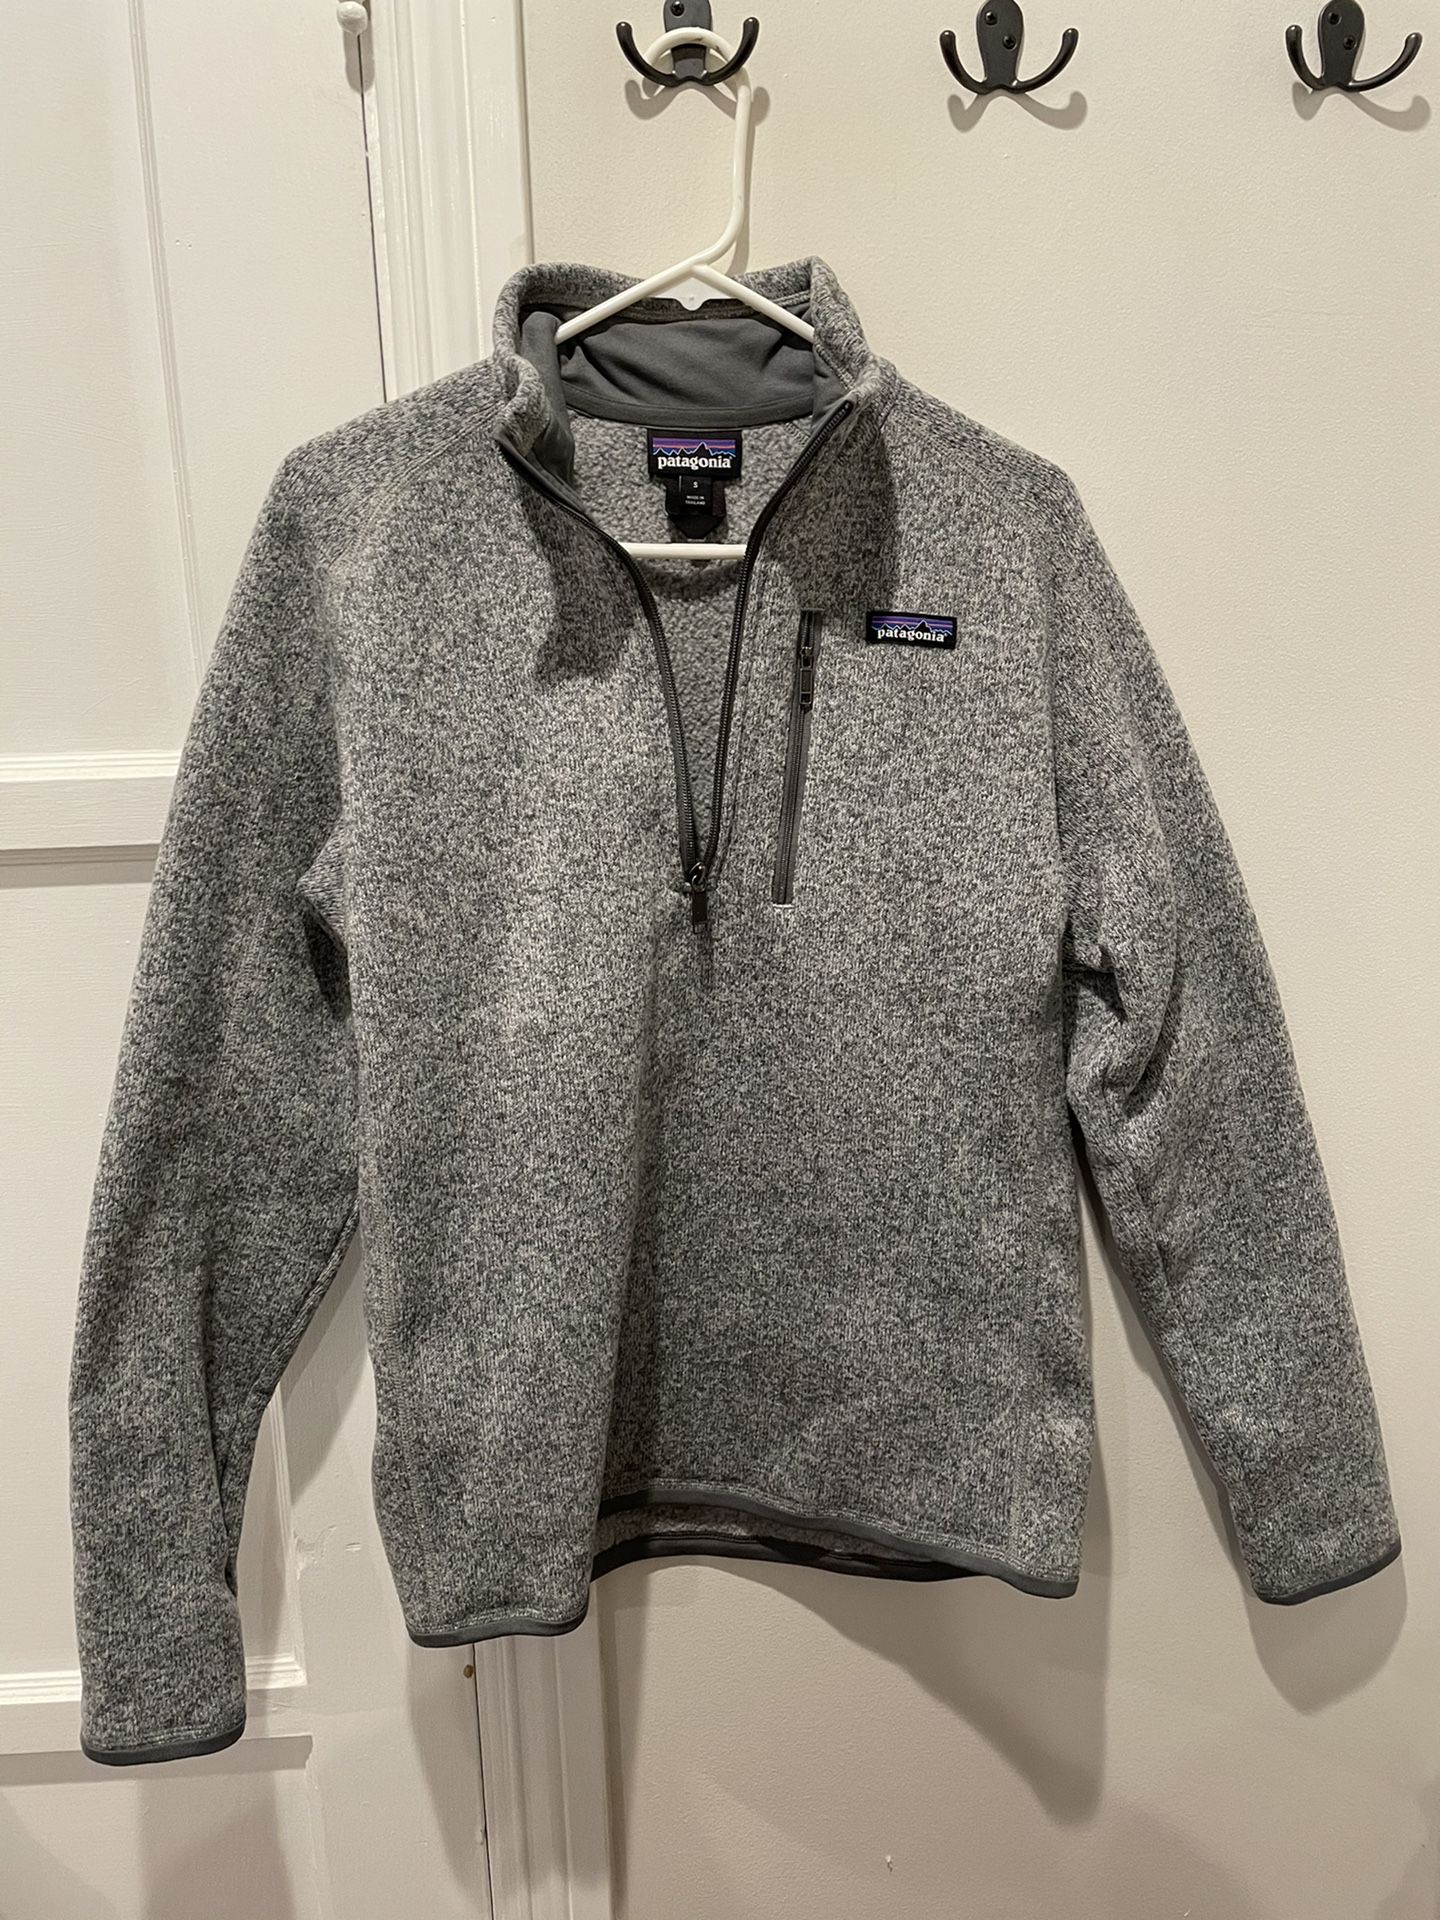 Patagonia Better Sweater Quarter-Zip Fleece Pullover - Men's Small